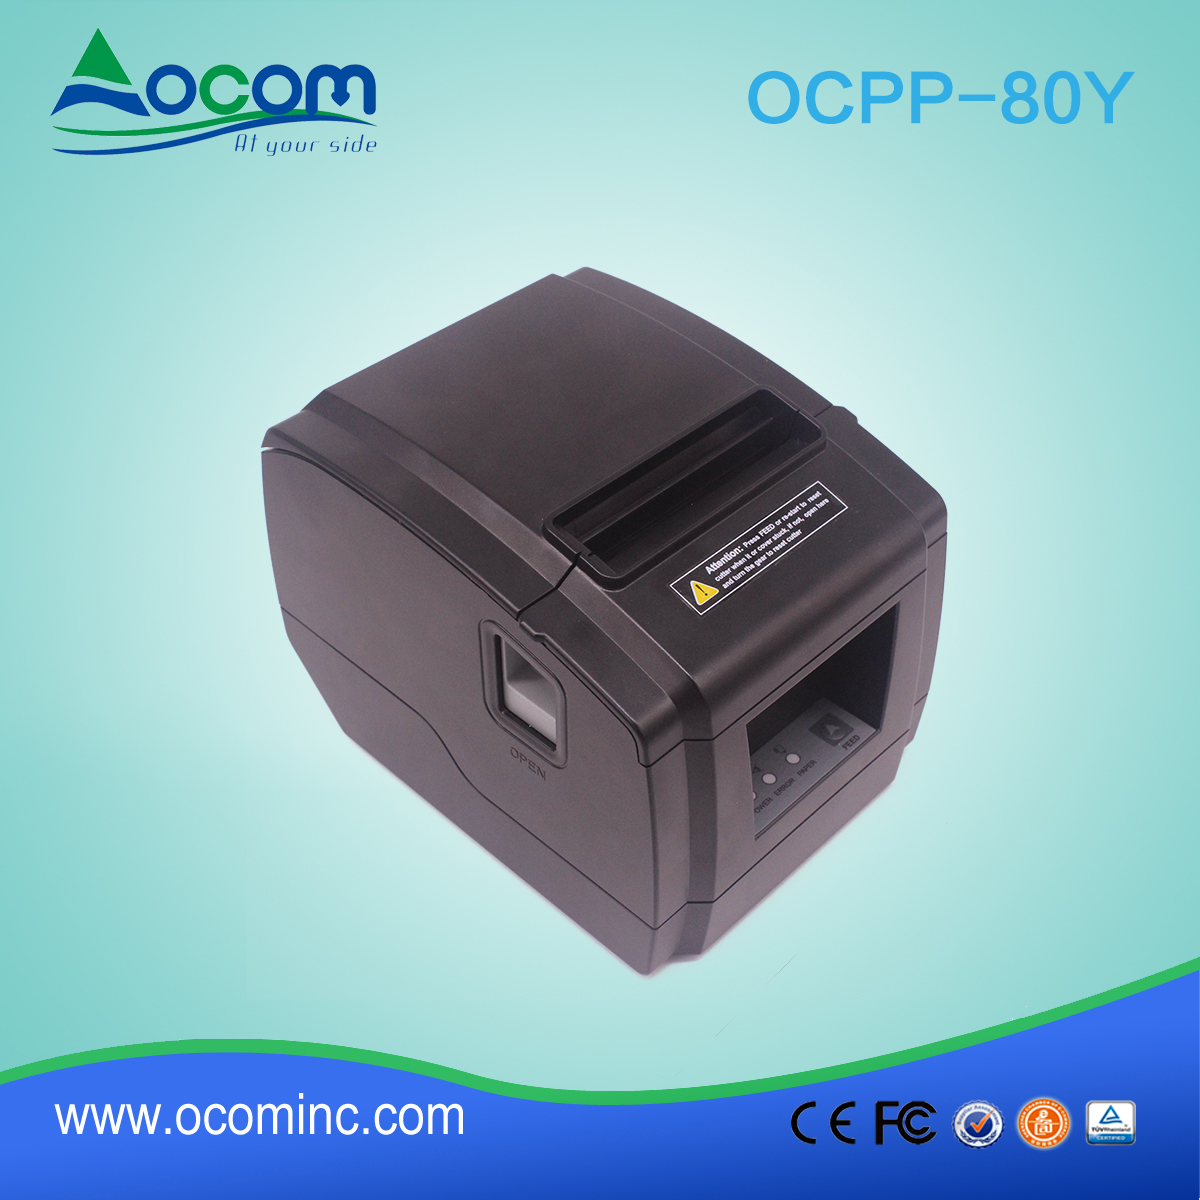 OCPP-80Y-χαμηλού κόστους εκτυπωτής θερμικής απόδοσης 80 χιλιοστών για χονδρική πώληση